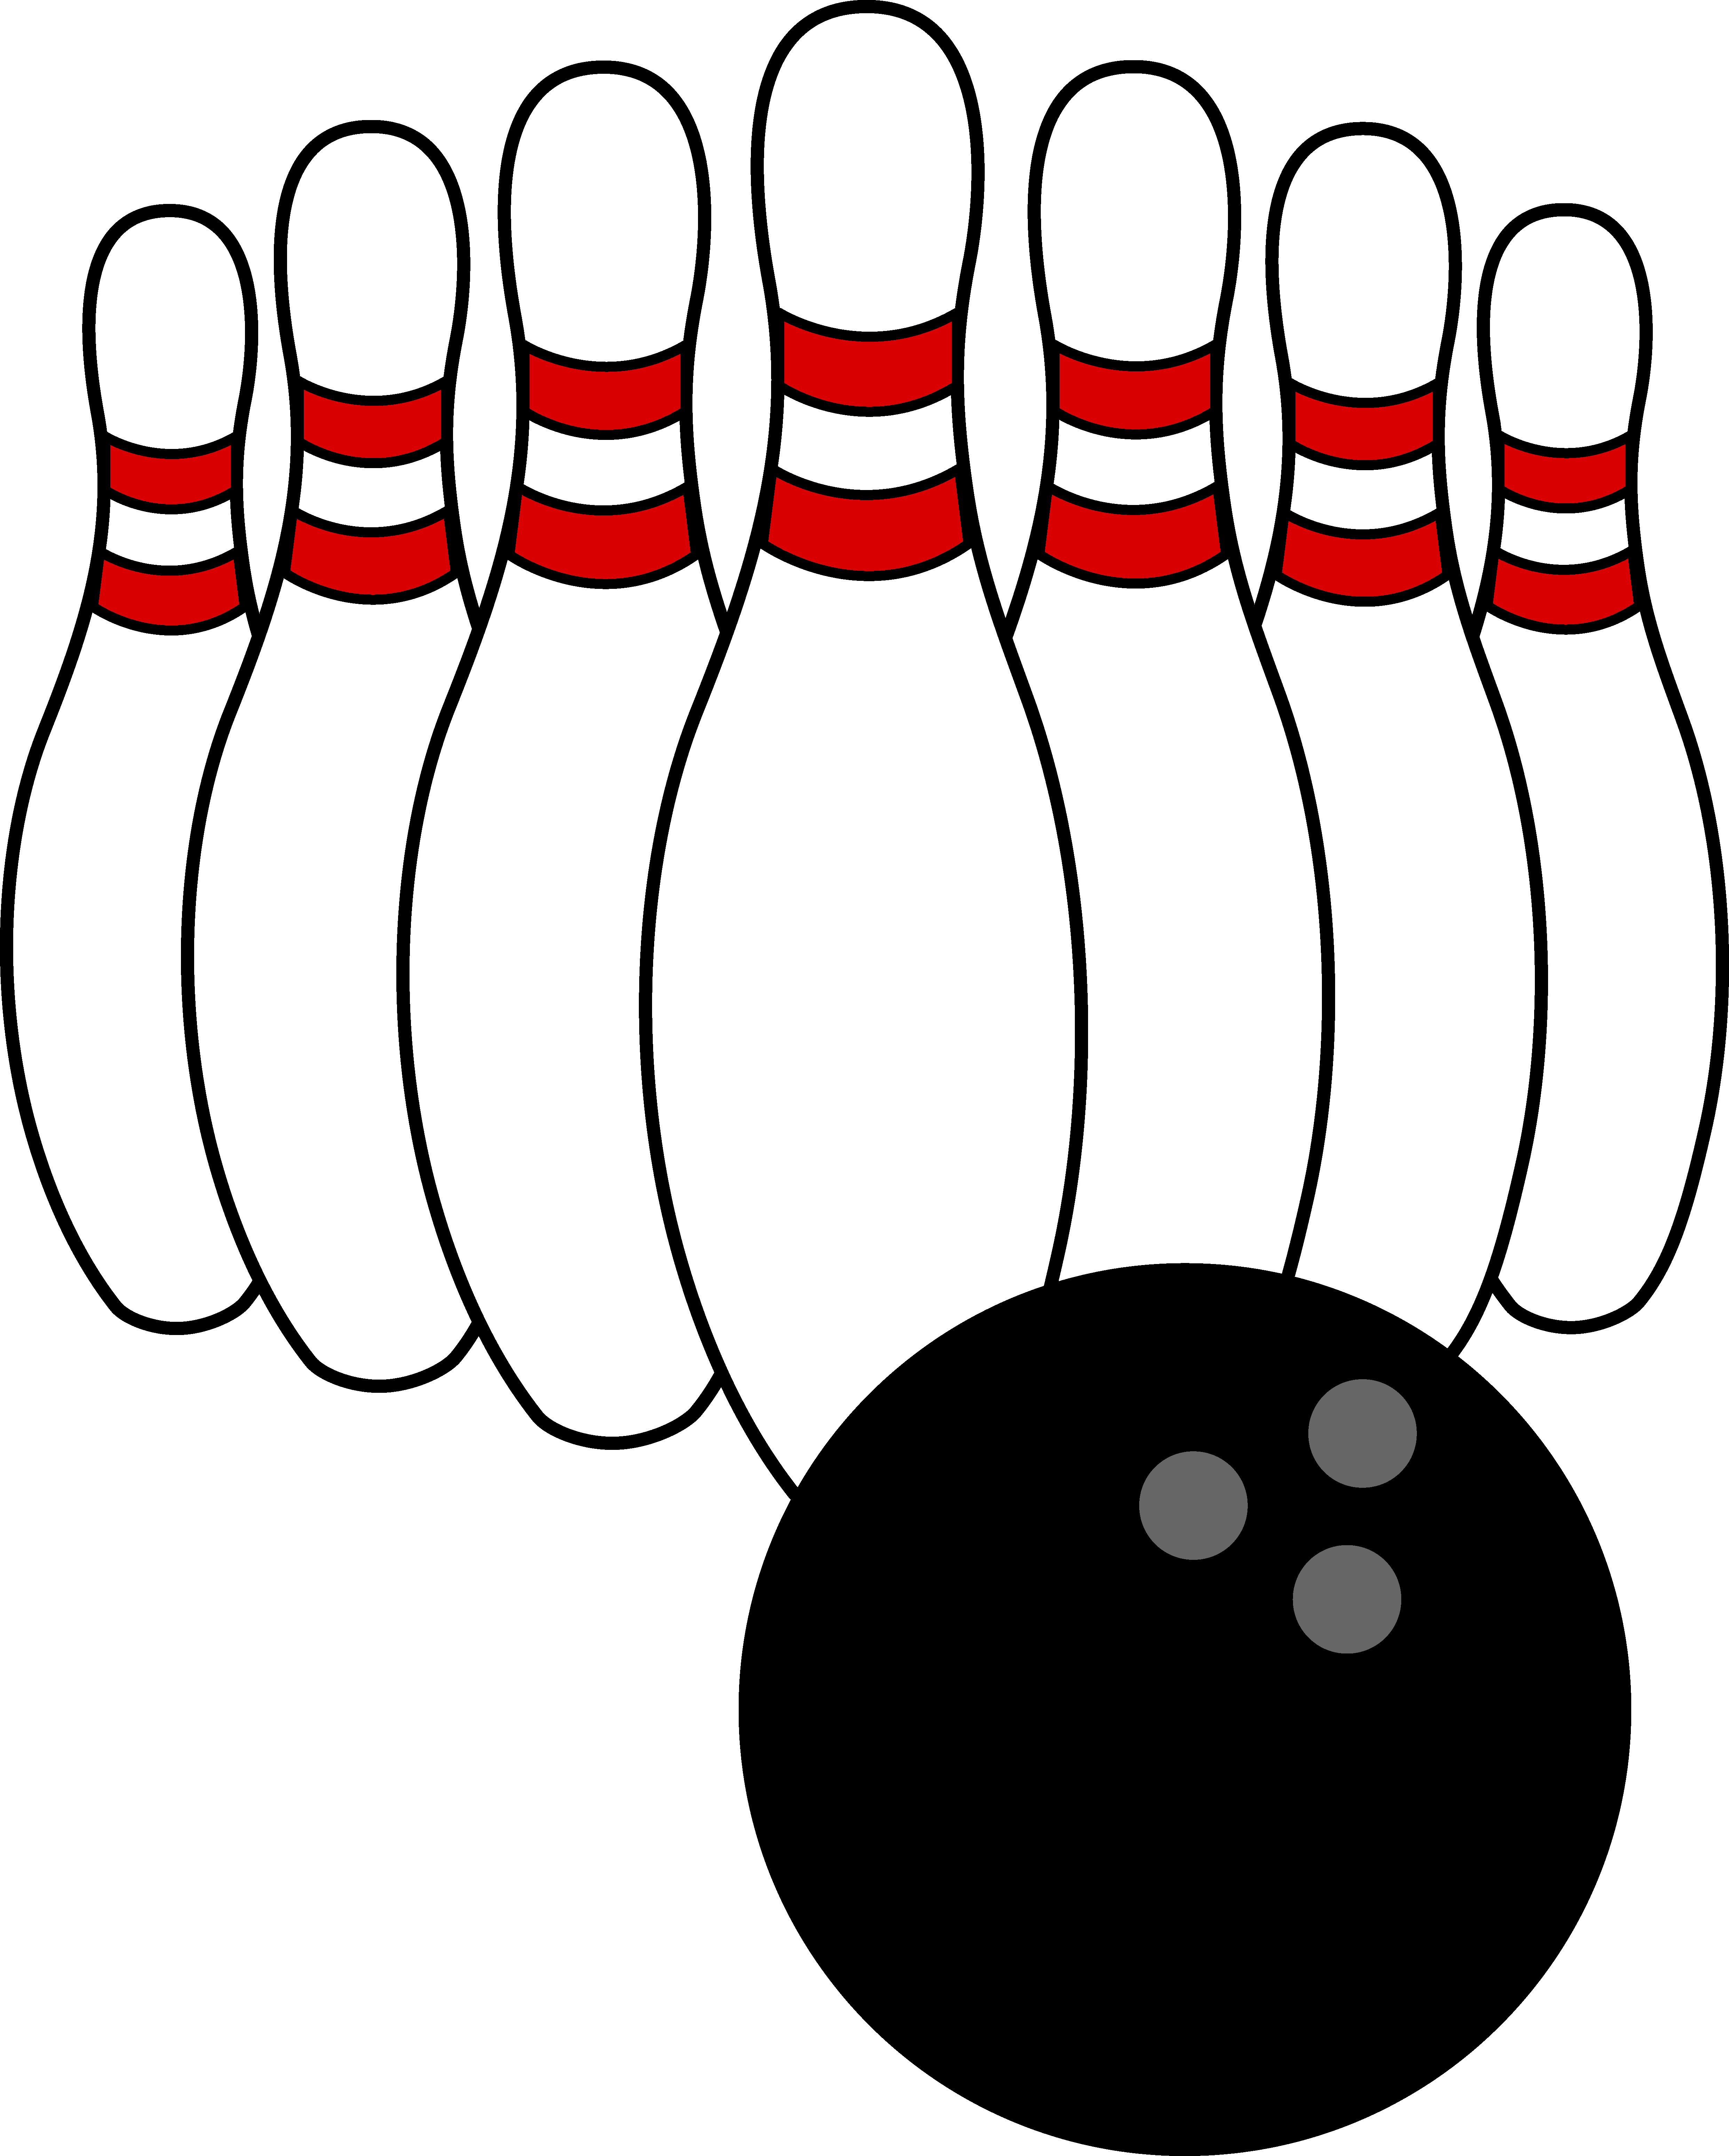 Bowling Pins Clip Art At Clke